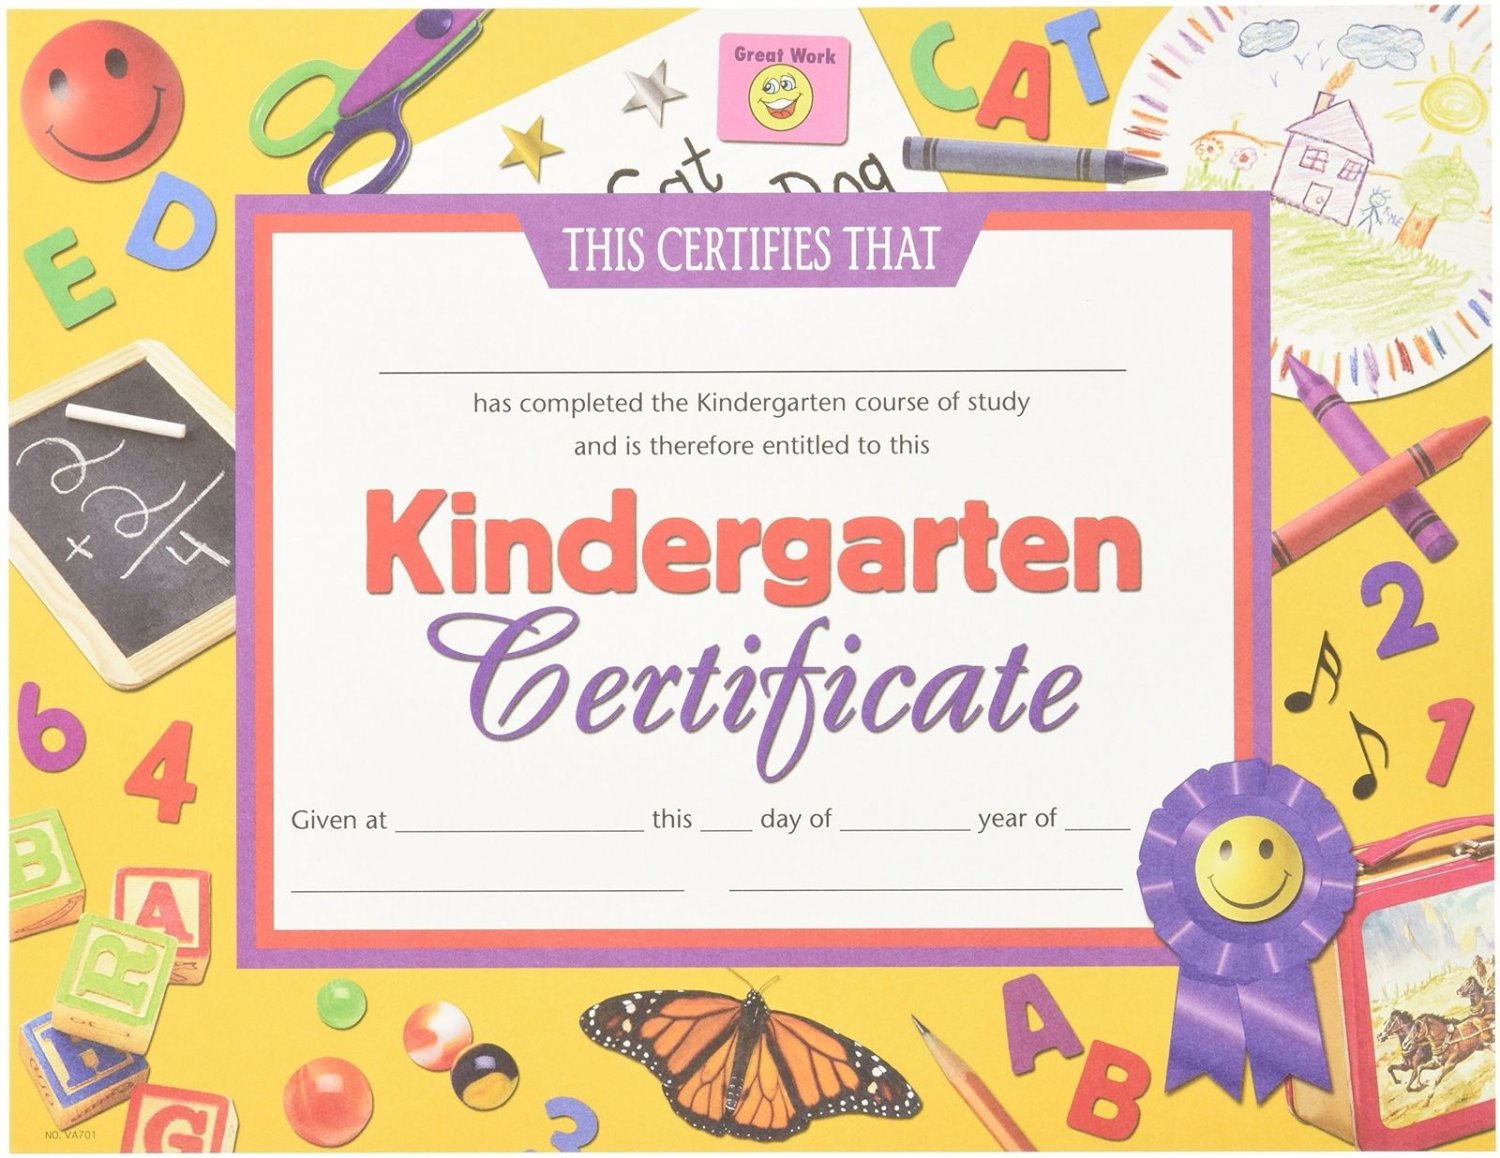 hayes-school-publishing-va701-kindergarten-certificate-8-1-2-x-11-size-pa